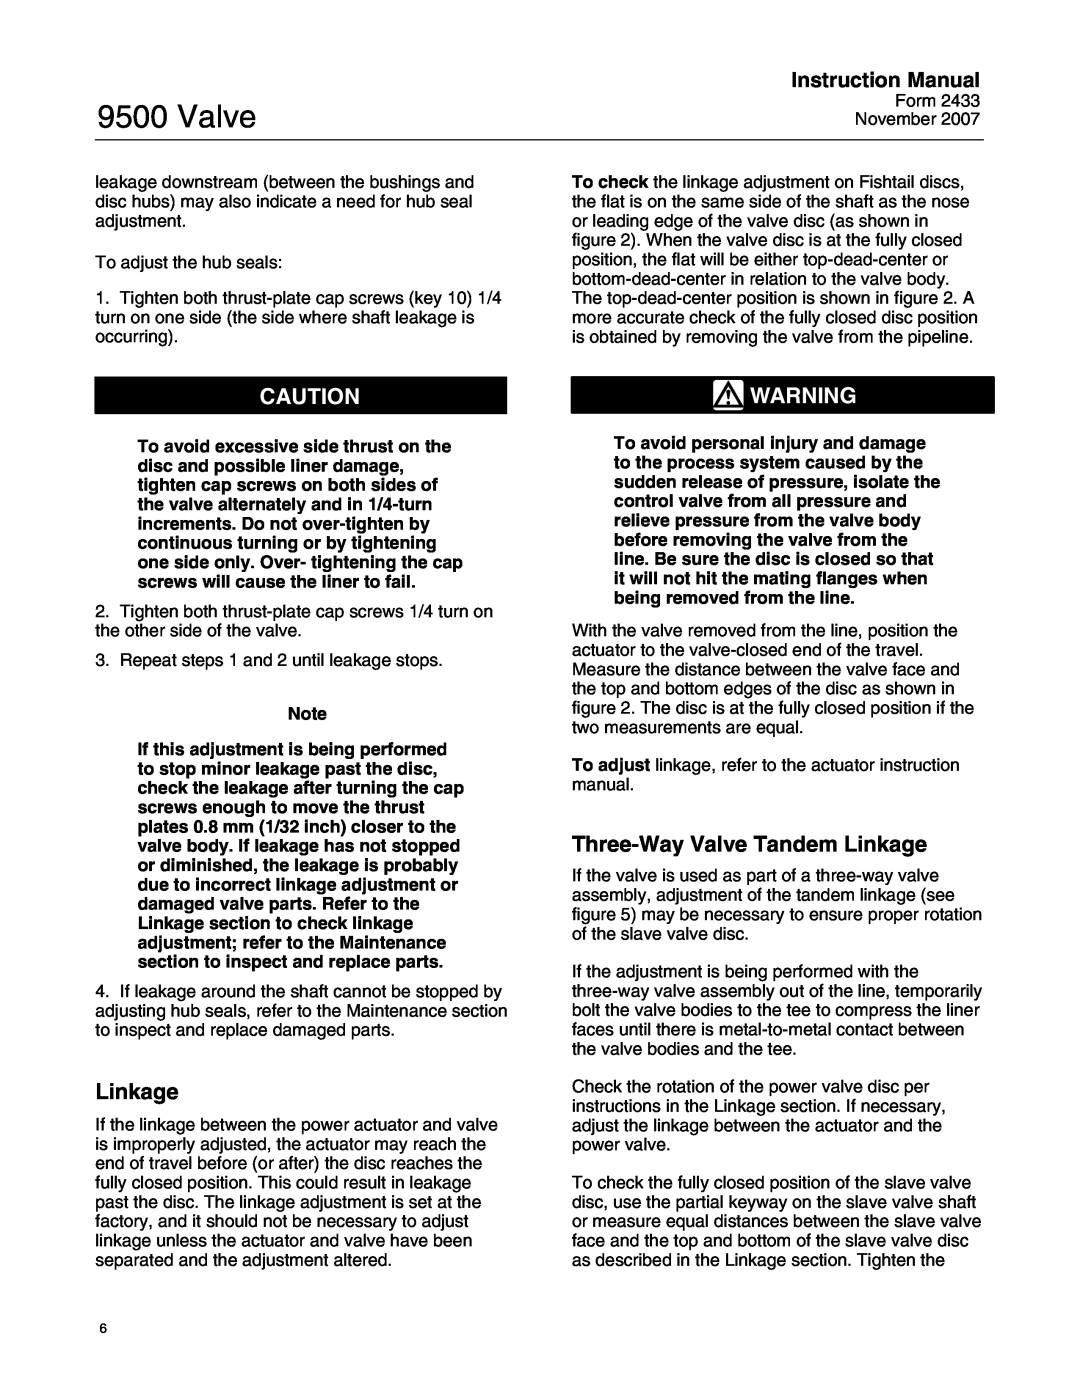 Fisher 9500 instruction manual Three-Way Valve Tandem Linkage, Instruction Manual 